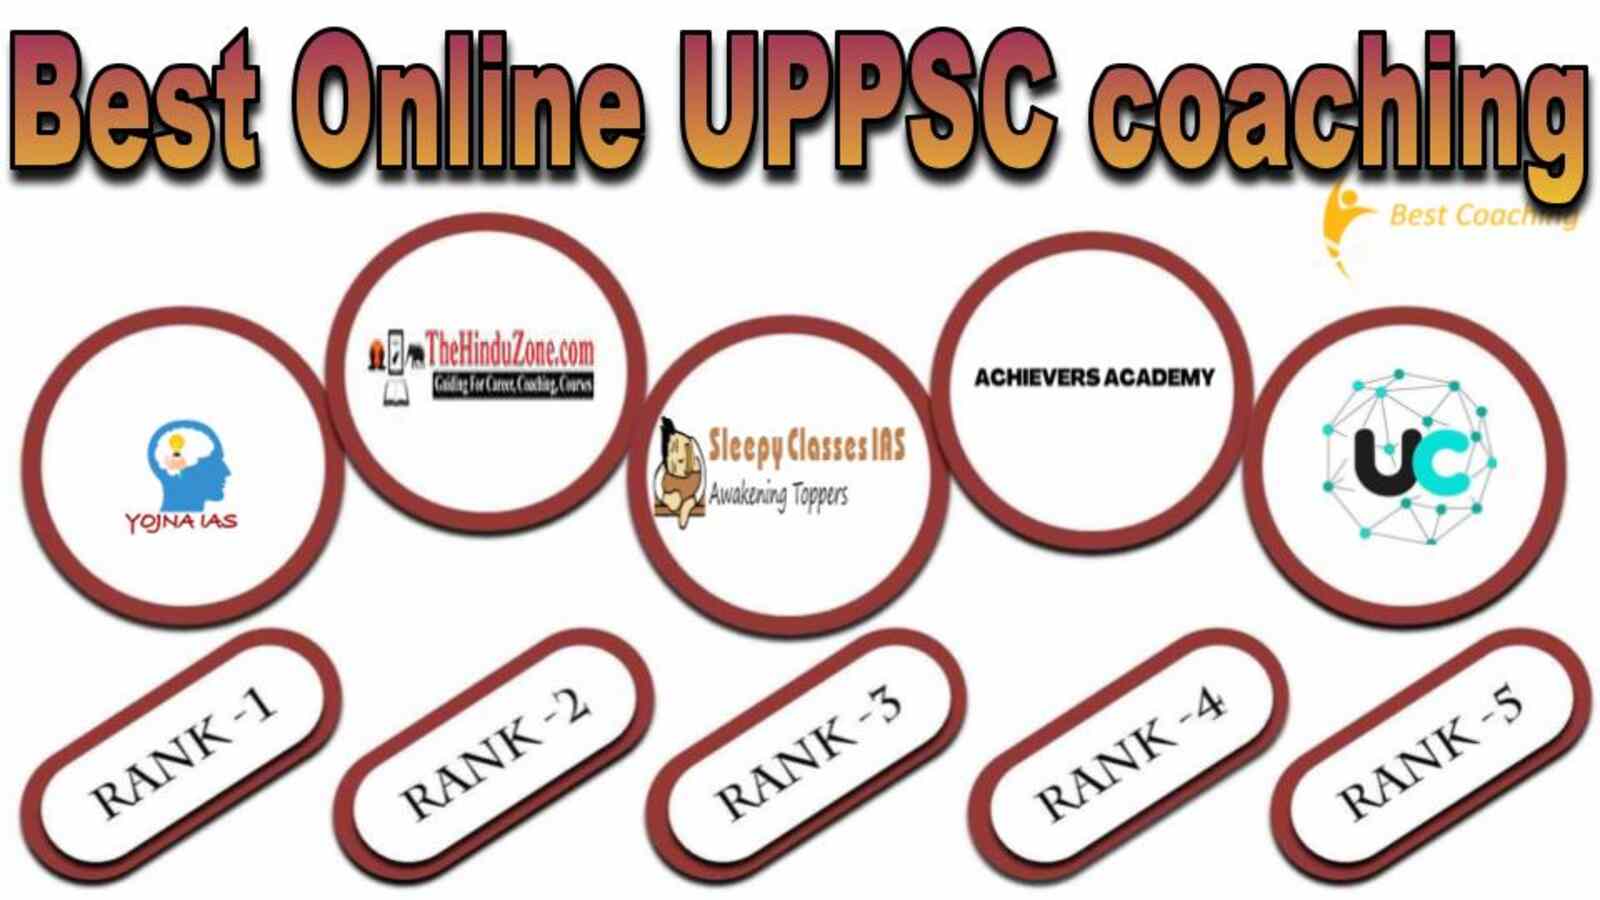 Best Online UPPSC coaching